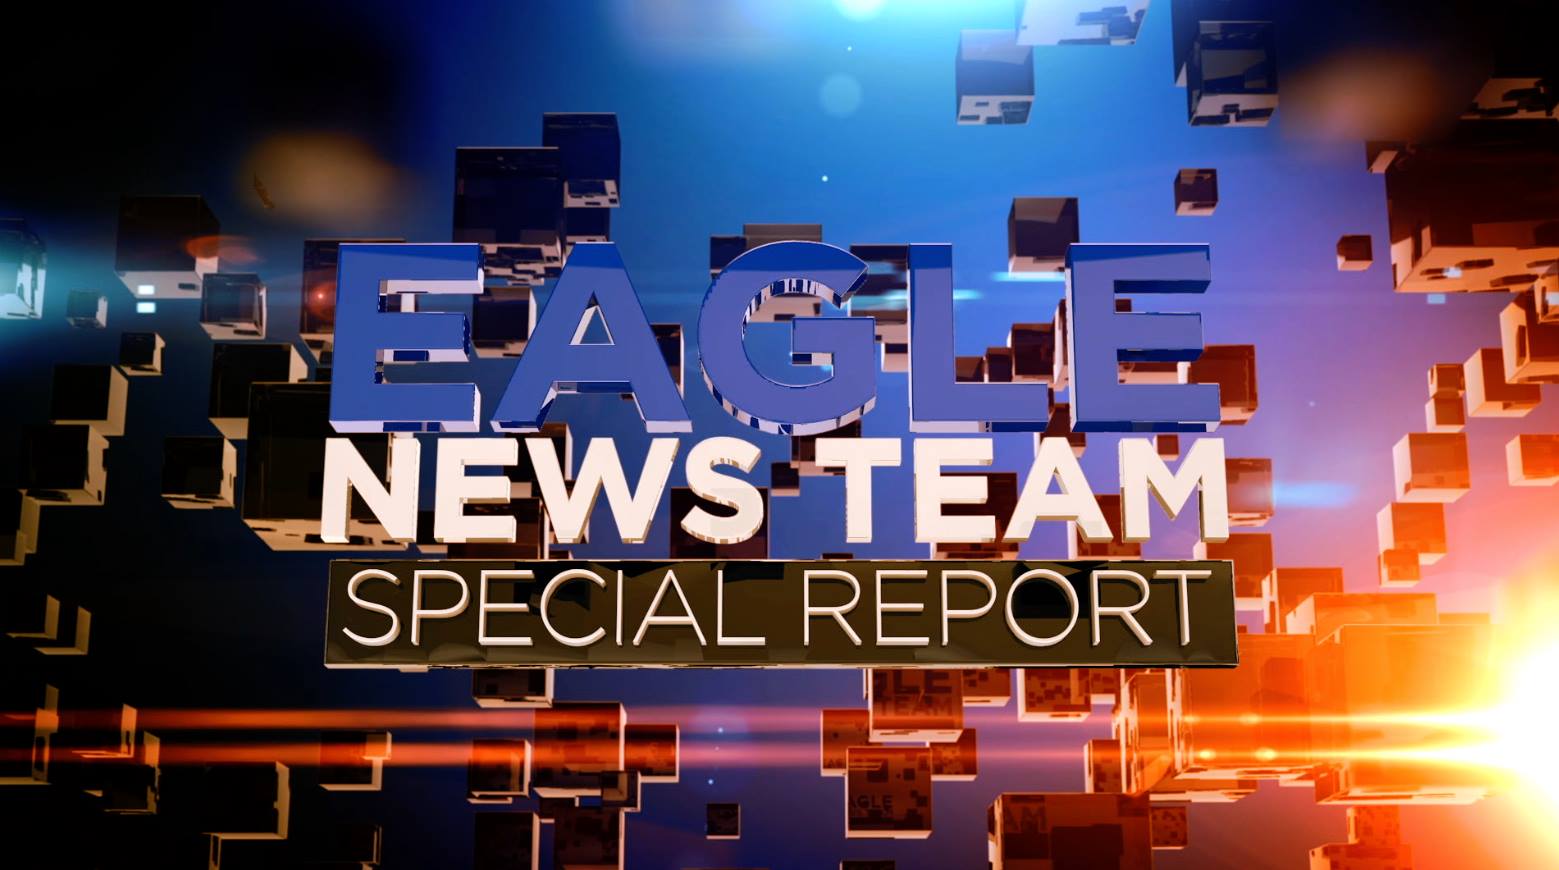 Eagle News Team special report